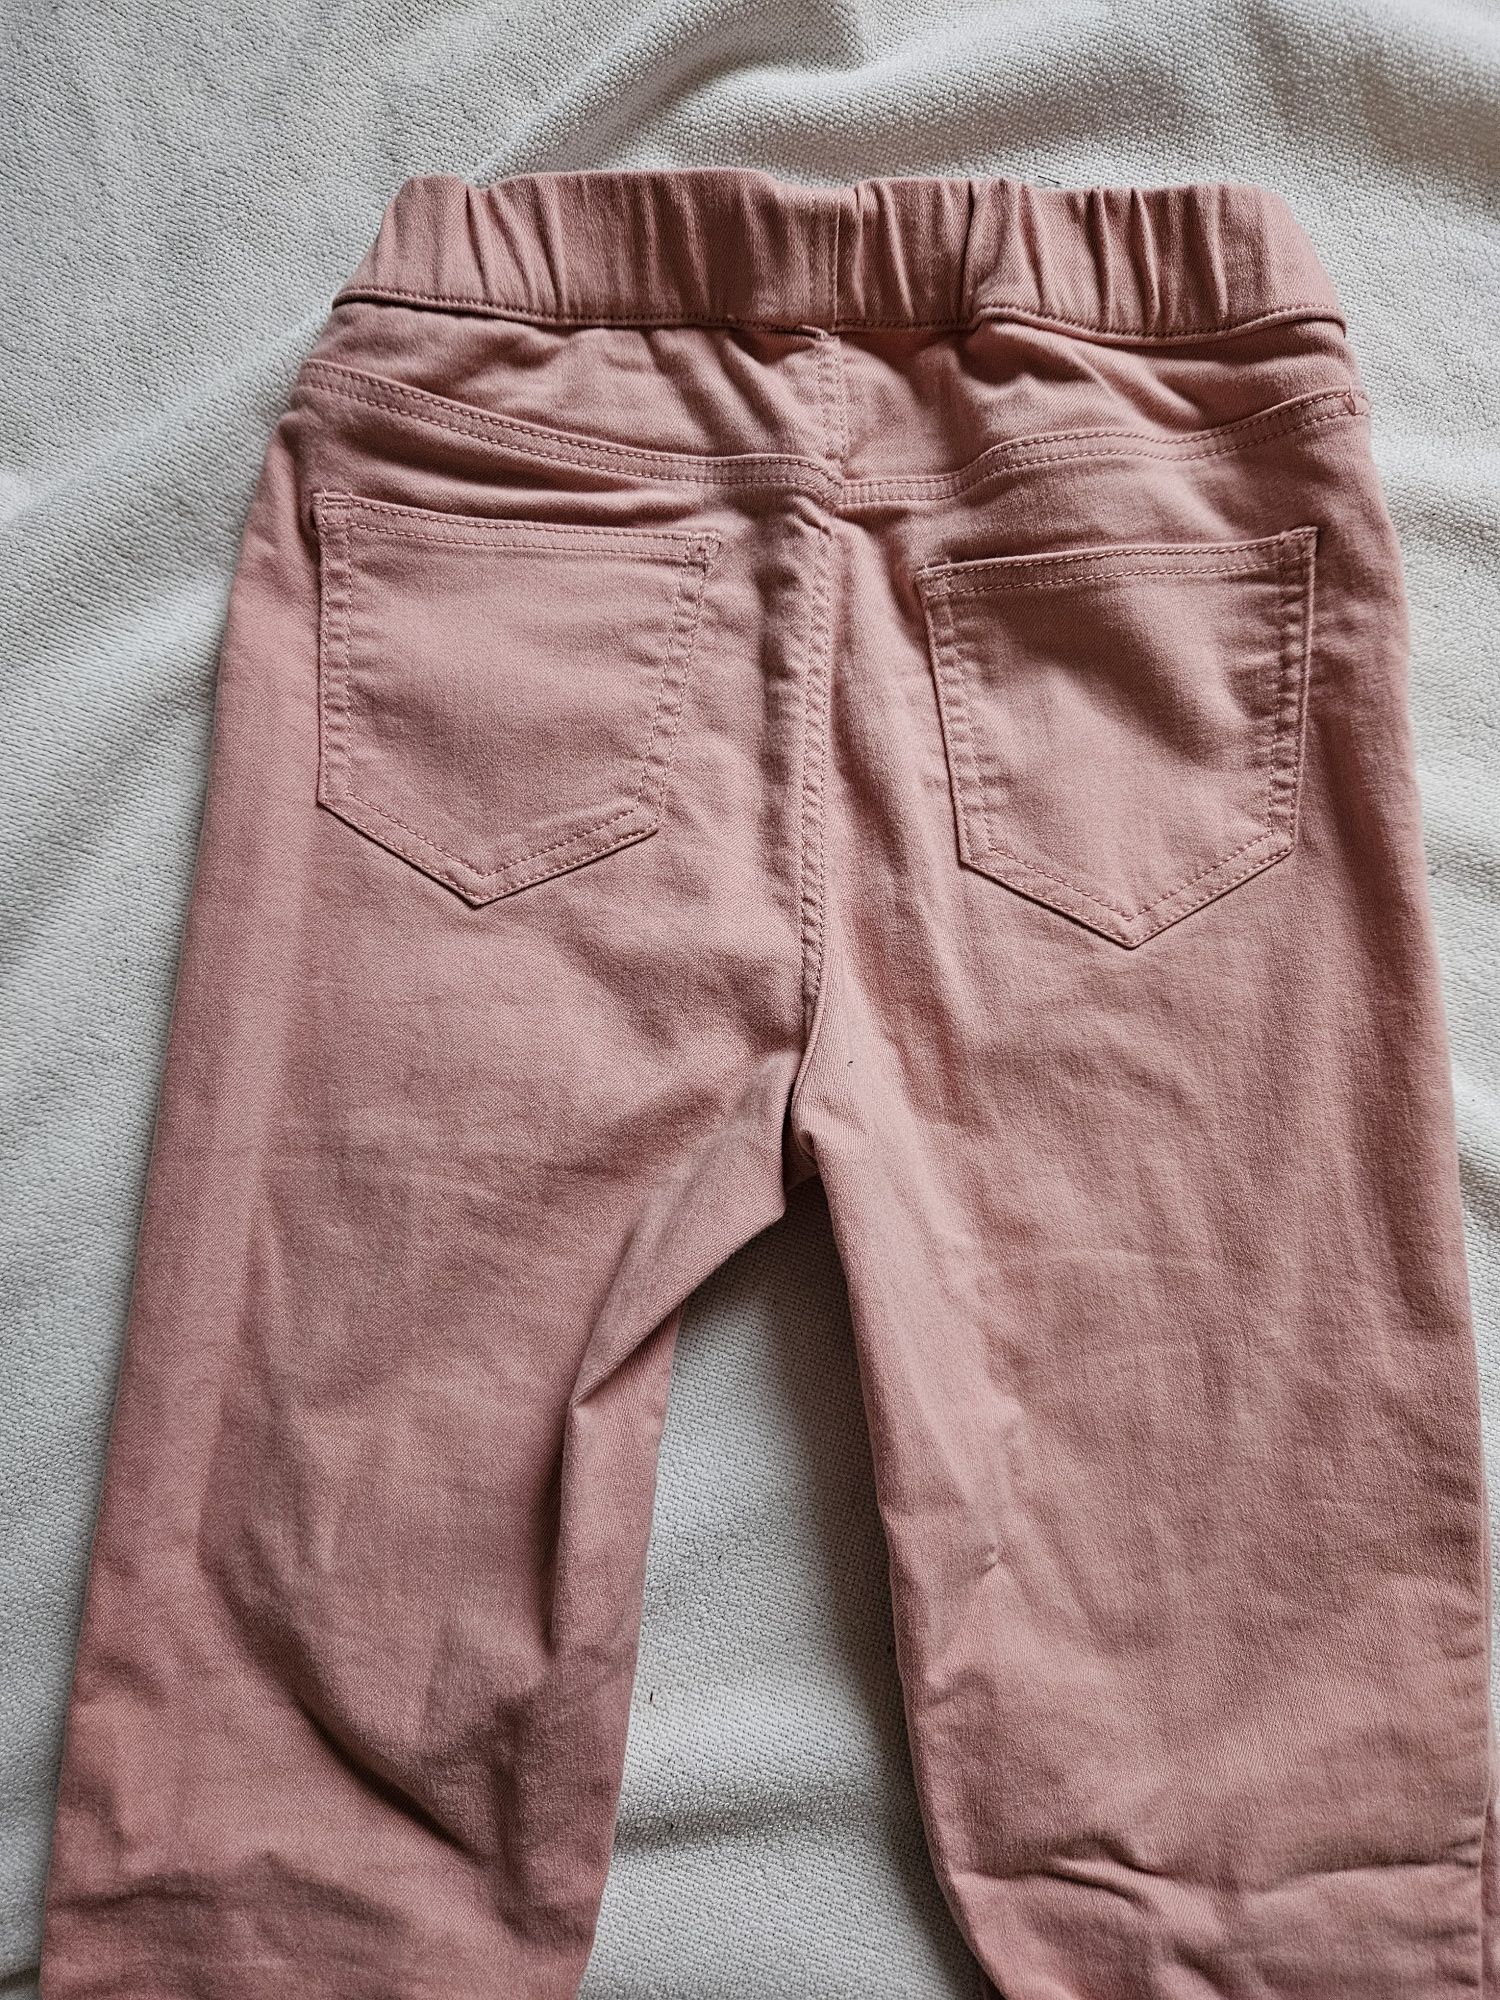 Blugi/Jeans elastici (colanți denim) H&M 8-9 ani